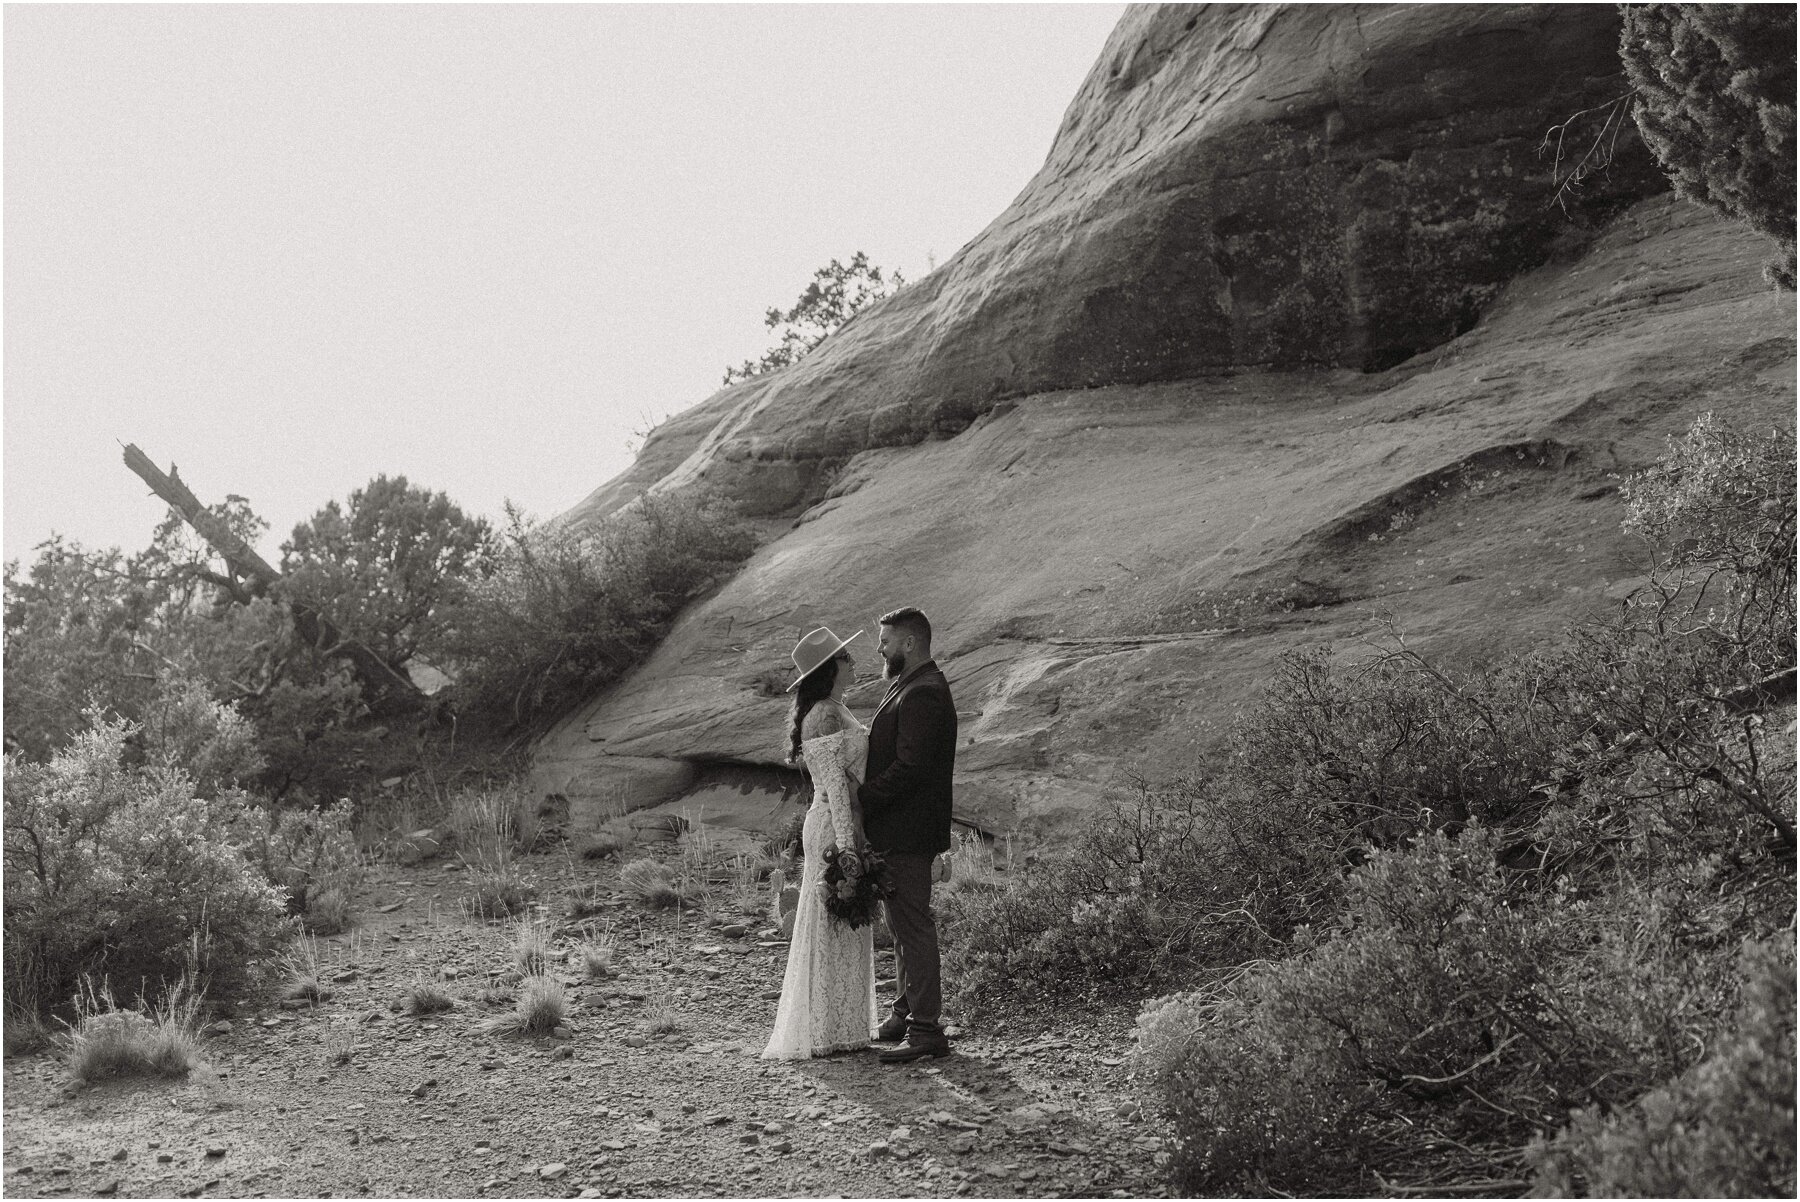 session in sedona - erika greene photography - arizona elopement photographer_0002.jpg